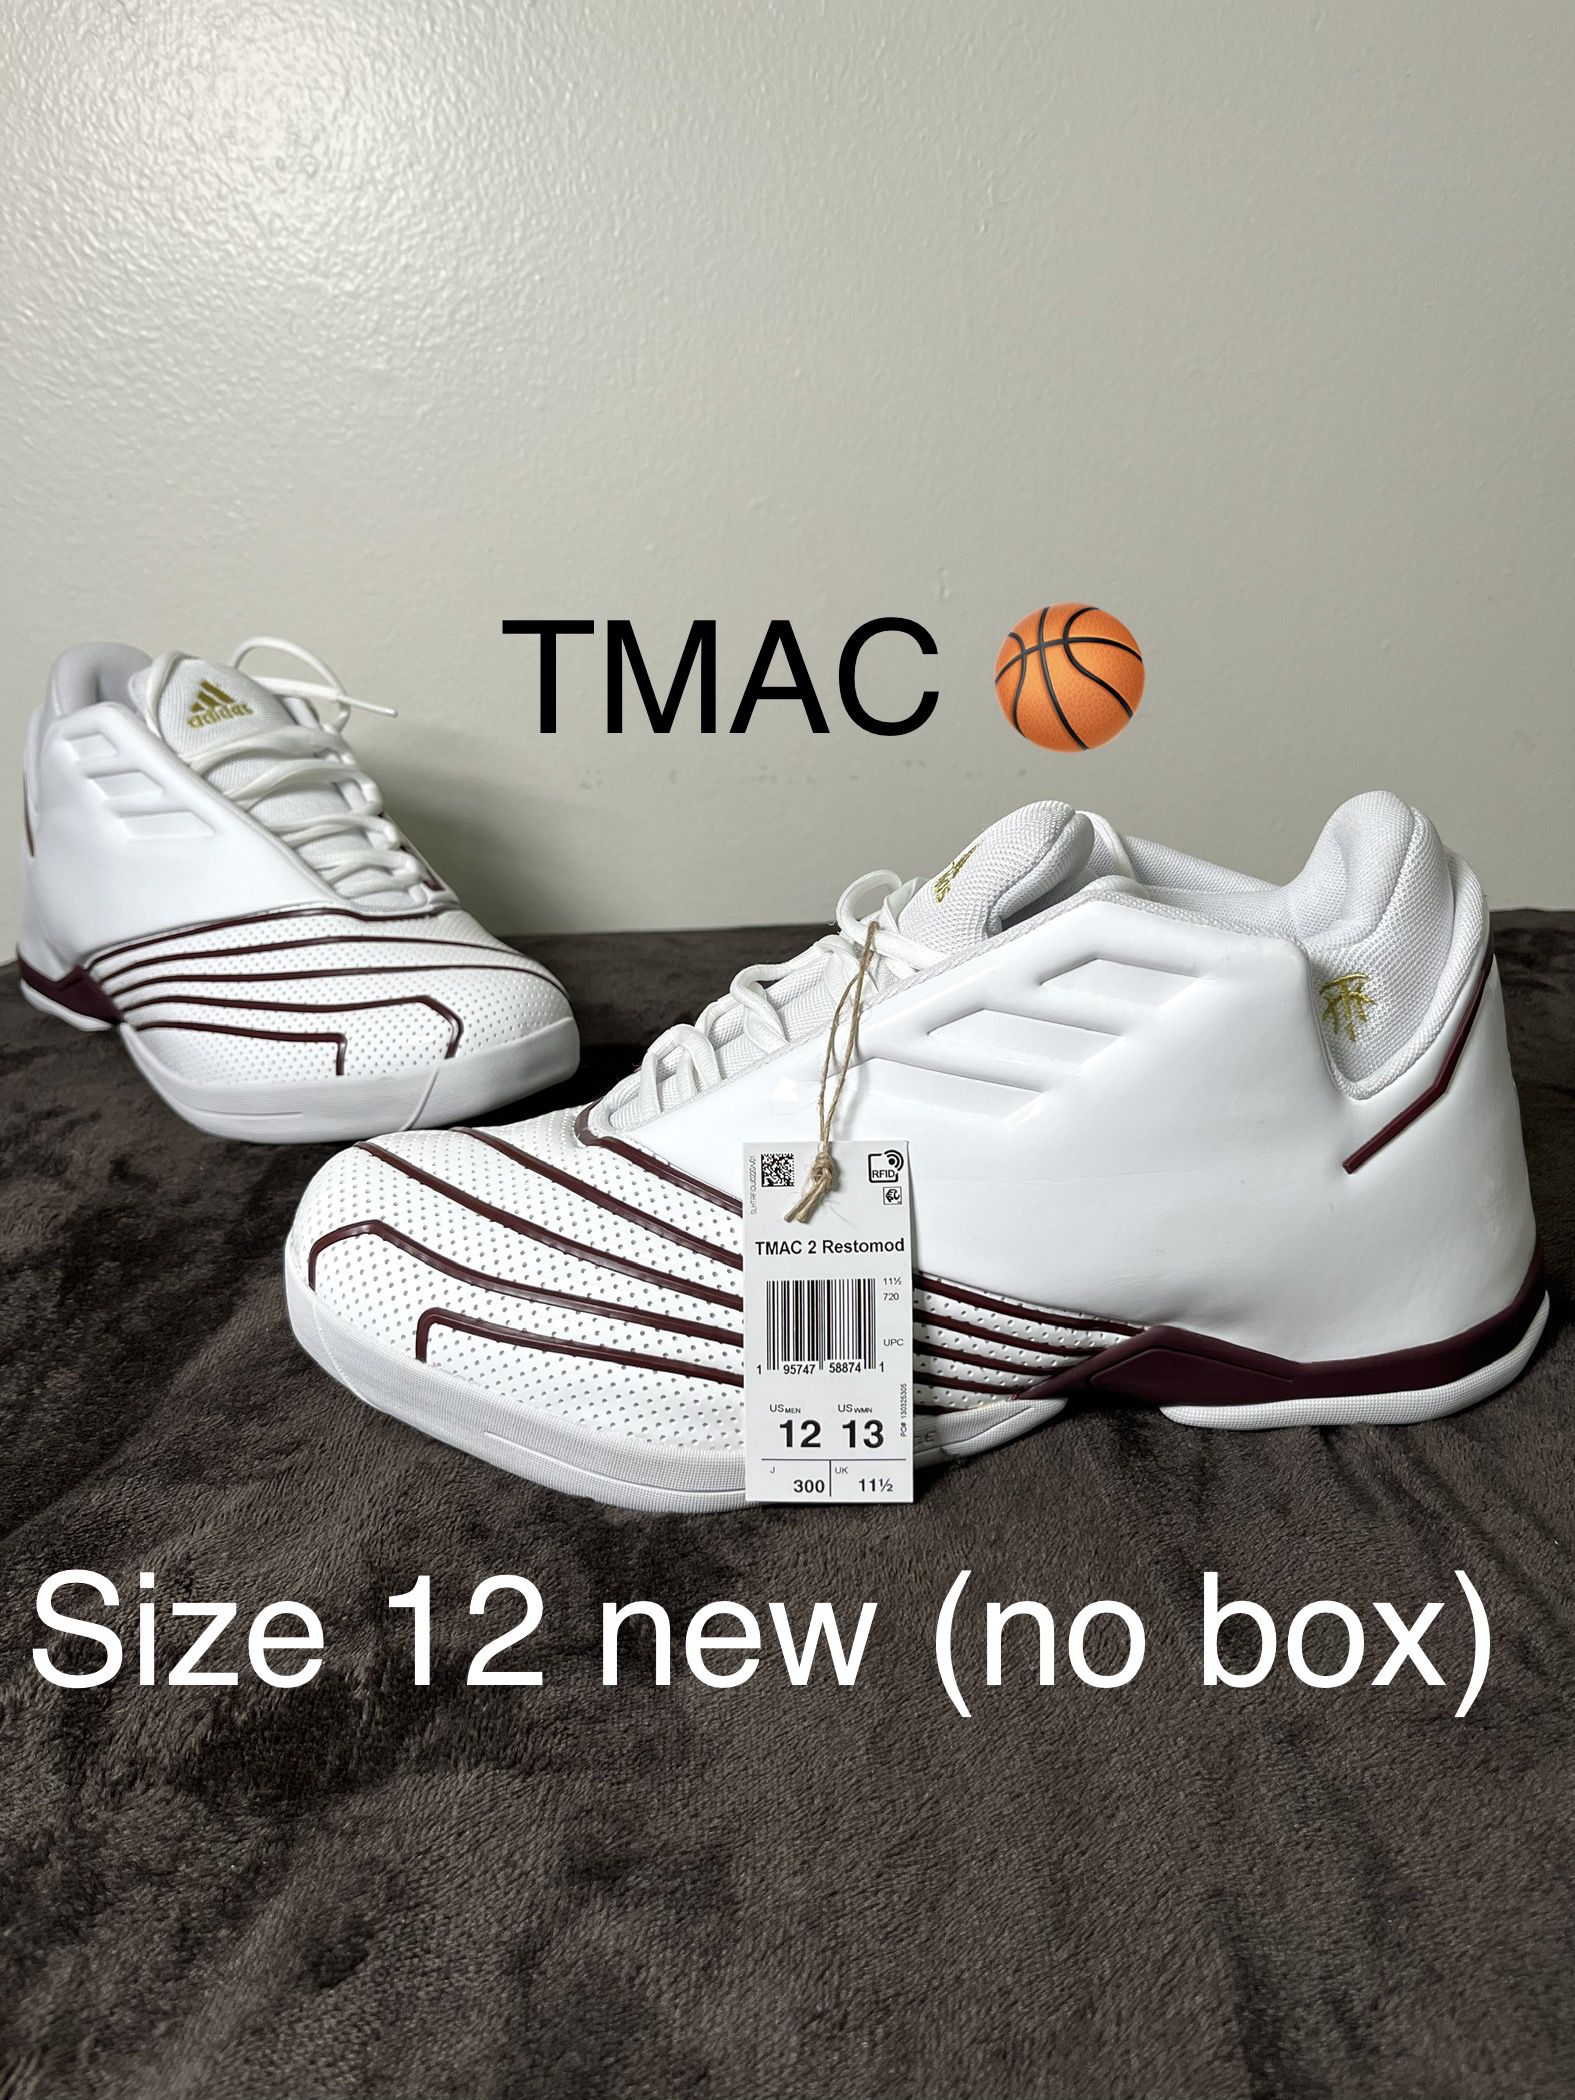 Tracy McGrady - Women - Basketball - Shoes